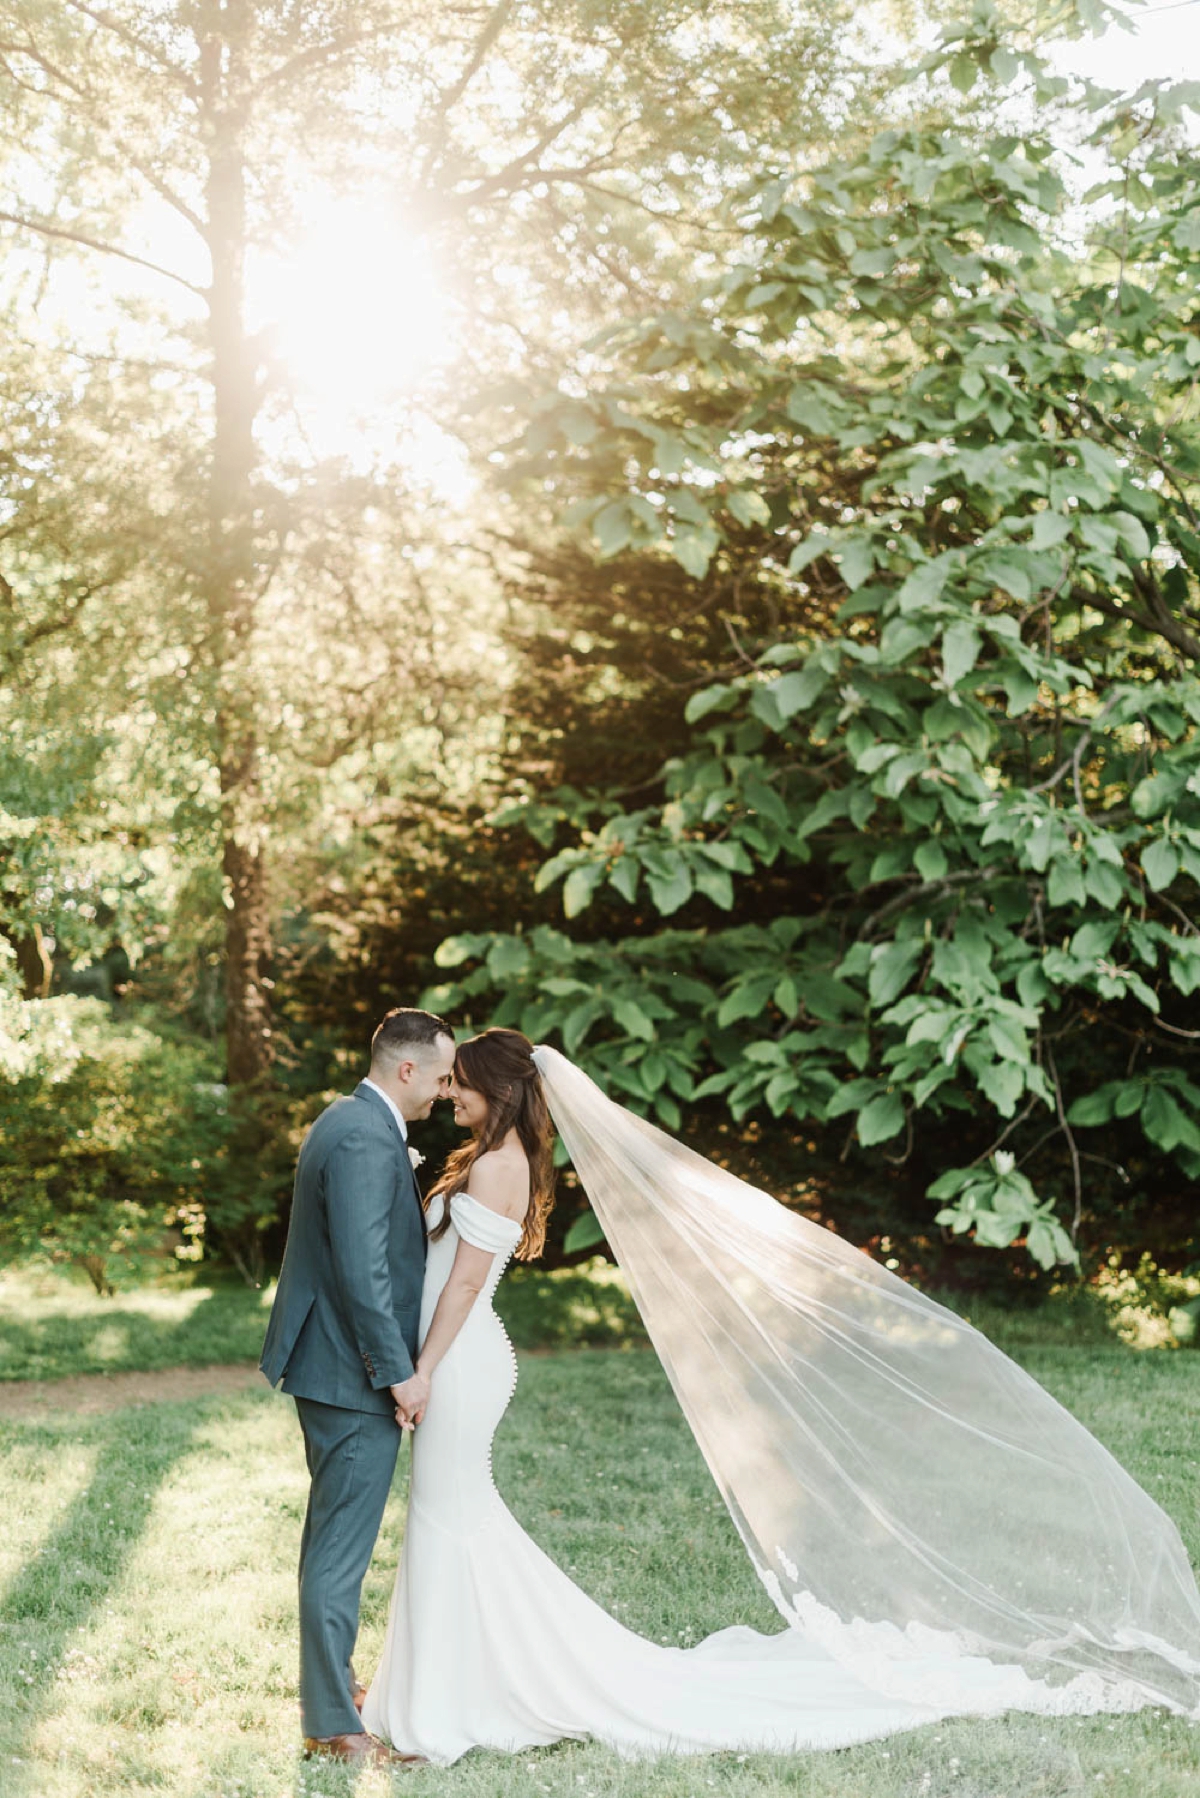 Garden Inspired Summer Wedding at Glen Magna Farms in Danvers, Massachusetts by Boston Wedding Photographer Annmarie Swift - Bride & groom portraits